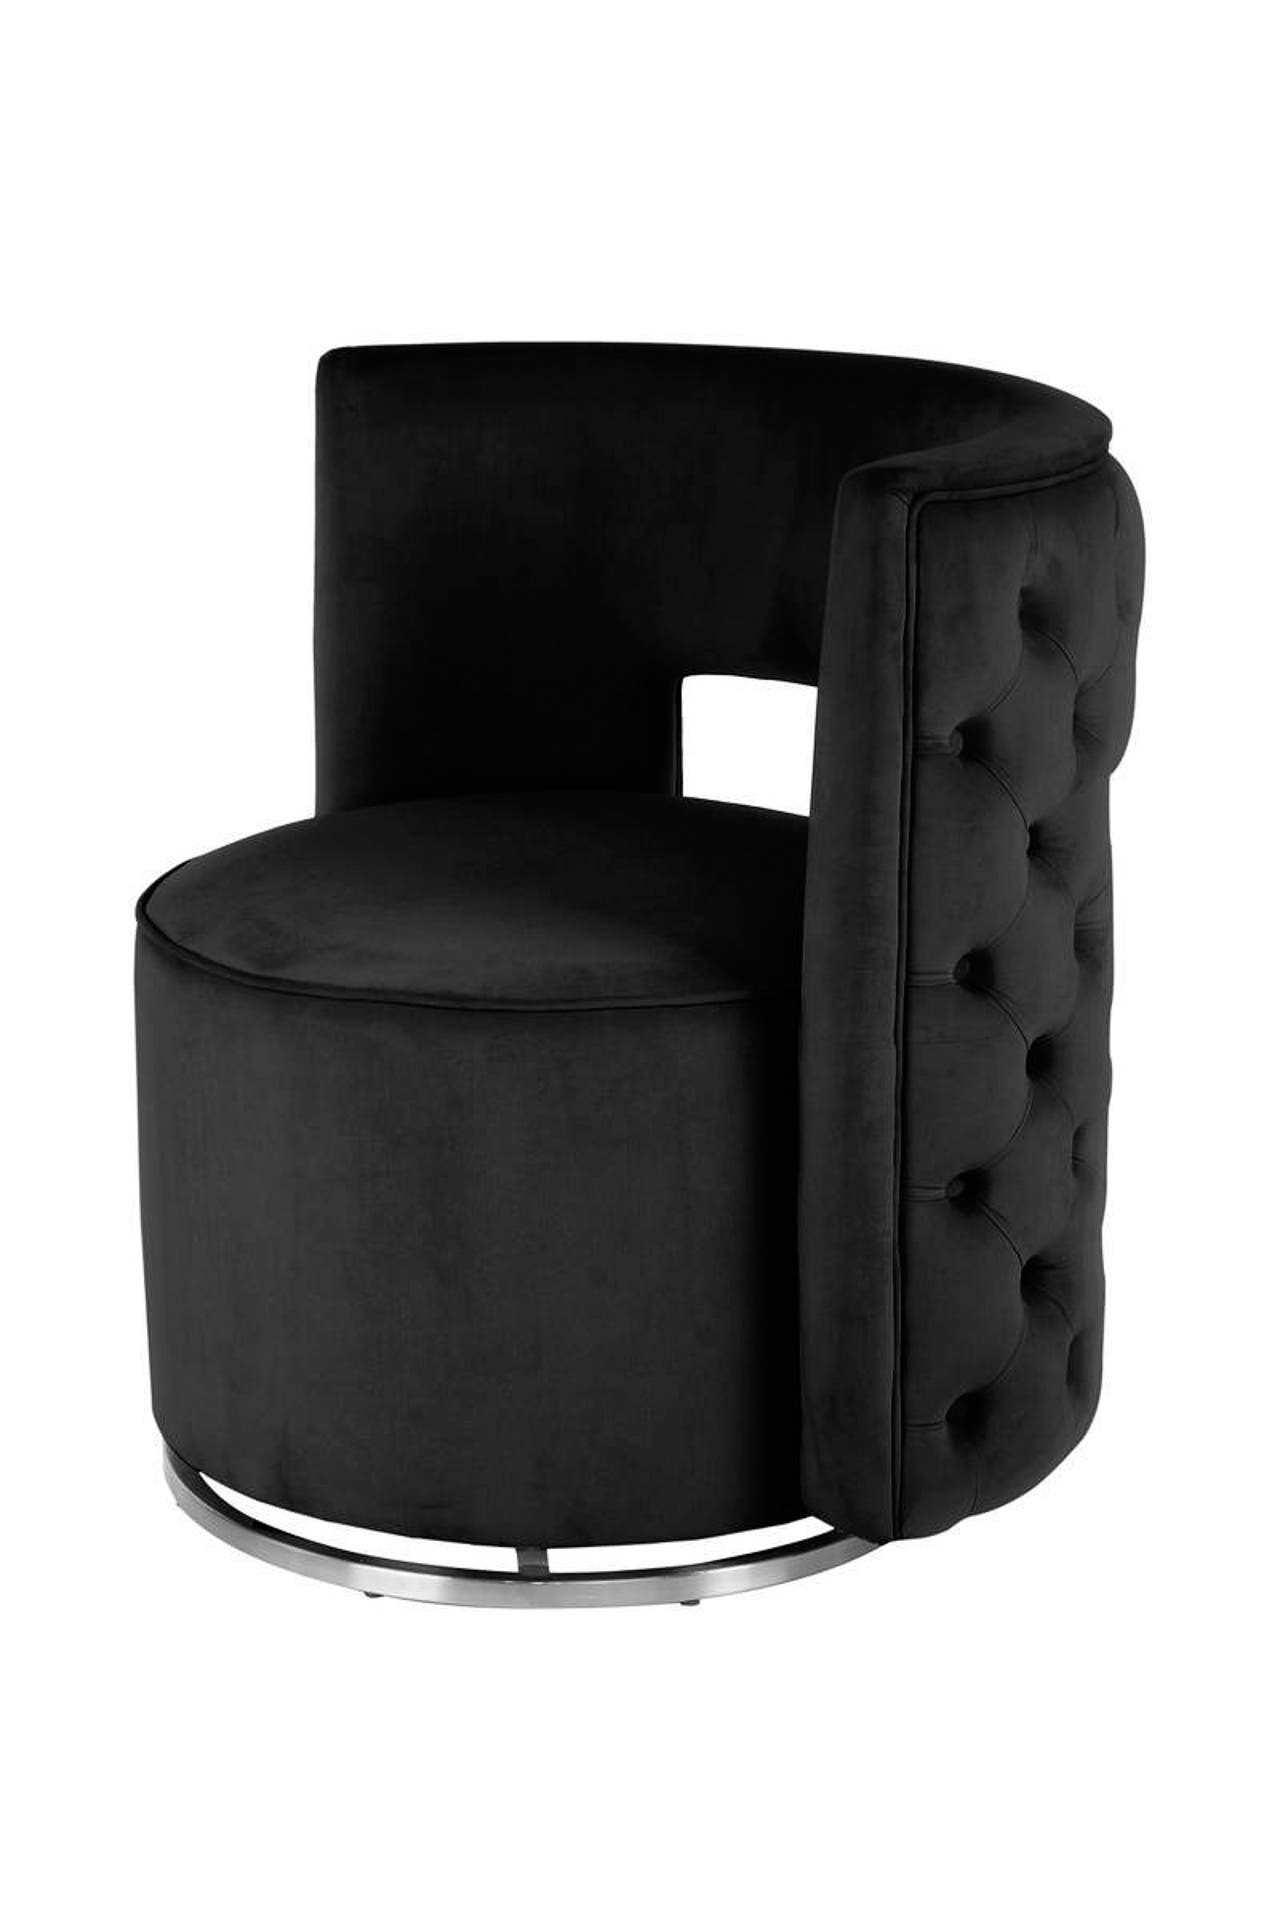 » Outletcity | KAYOOM Sessel online Beverly - 125 günstig kaufen